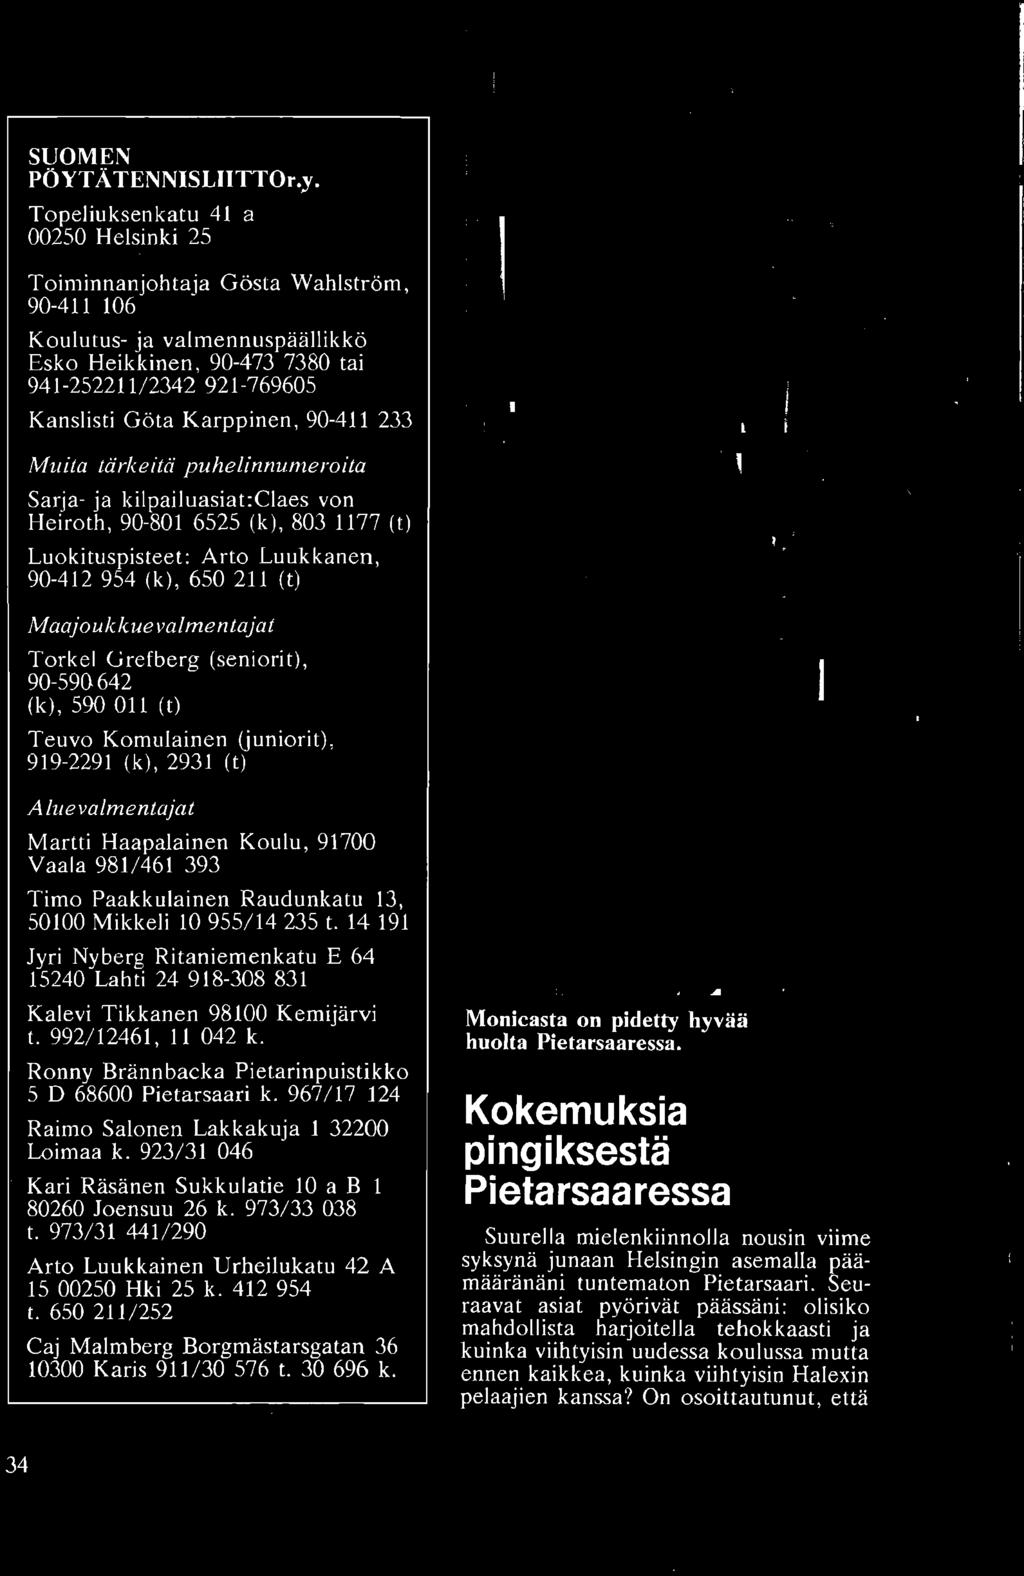 14 191 Jyri Nyberg Ritaniemenkatu E 64 15240 Lahti 24 918-308 831 Kalevi Tikkanen 98100 Kemijarvi t. 992/12461, 11 042 k. Ronny Brannbacka Pietarinpuistikko 5 D 68600 Pietarsaari k.